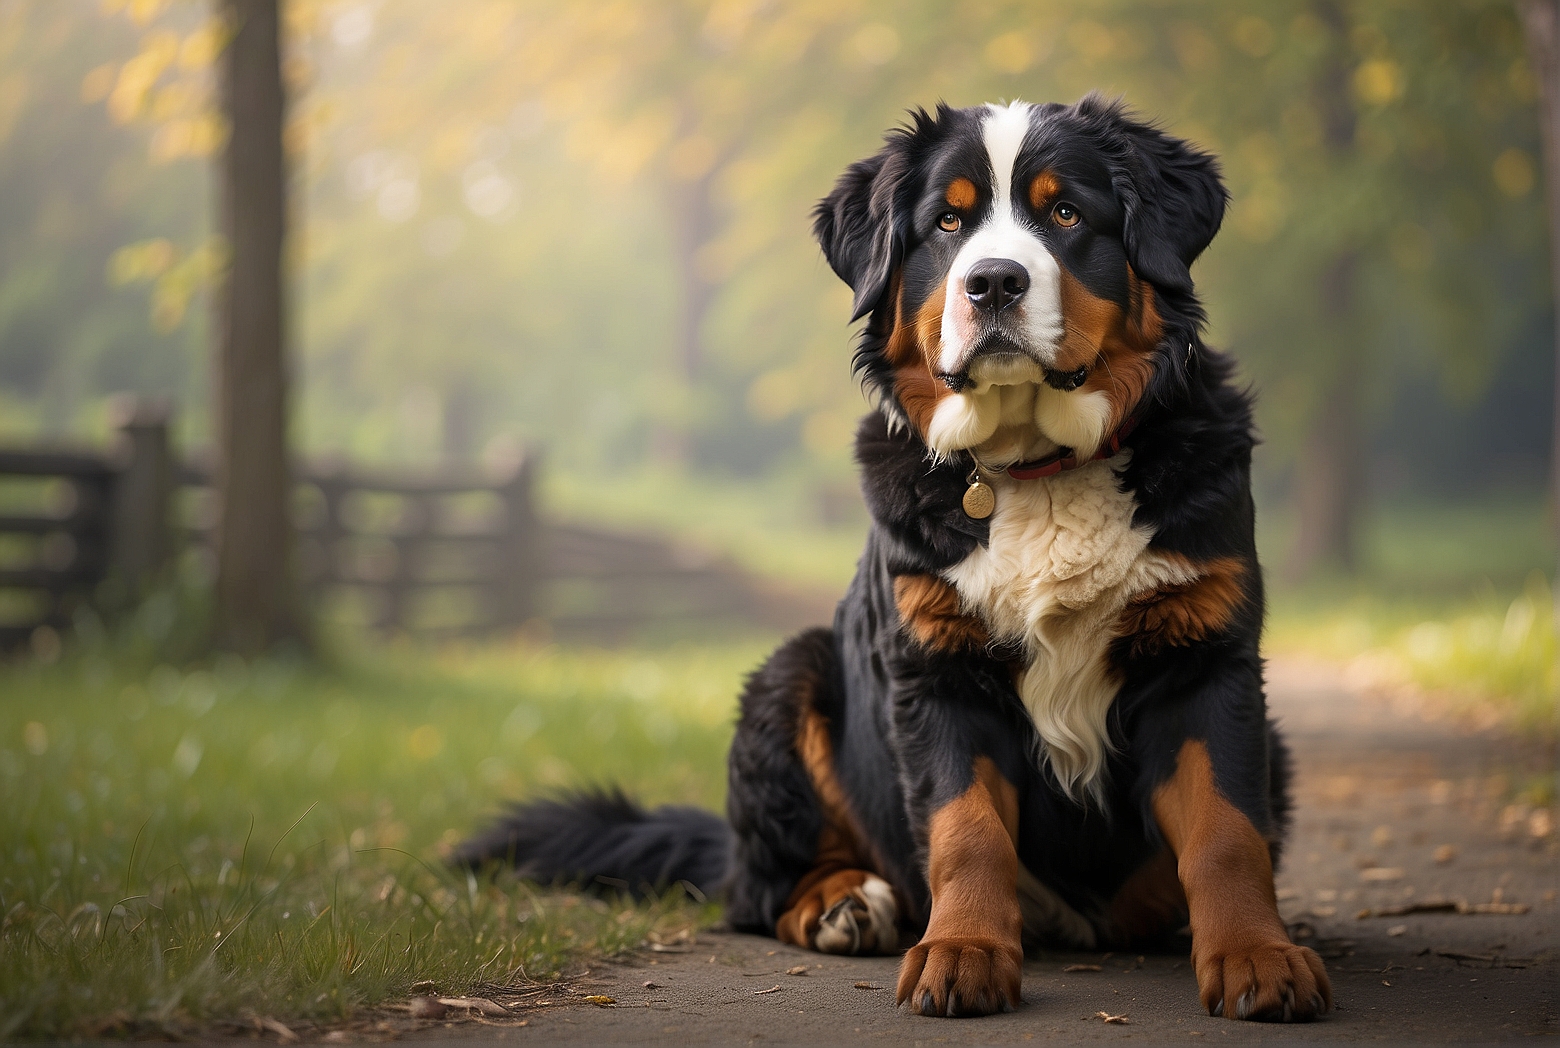 Can You Train a Bernese Mountain Dog to Be a Guard Dog?